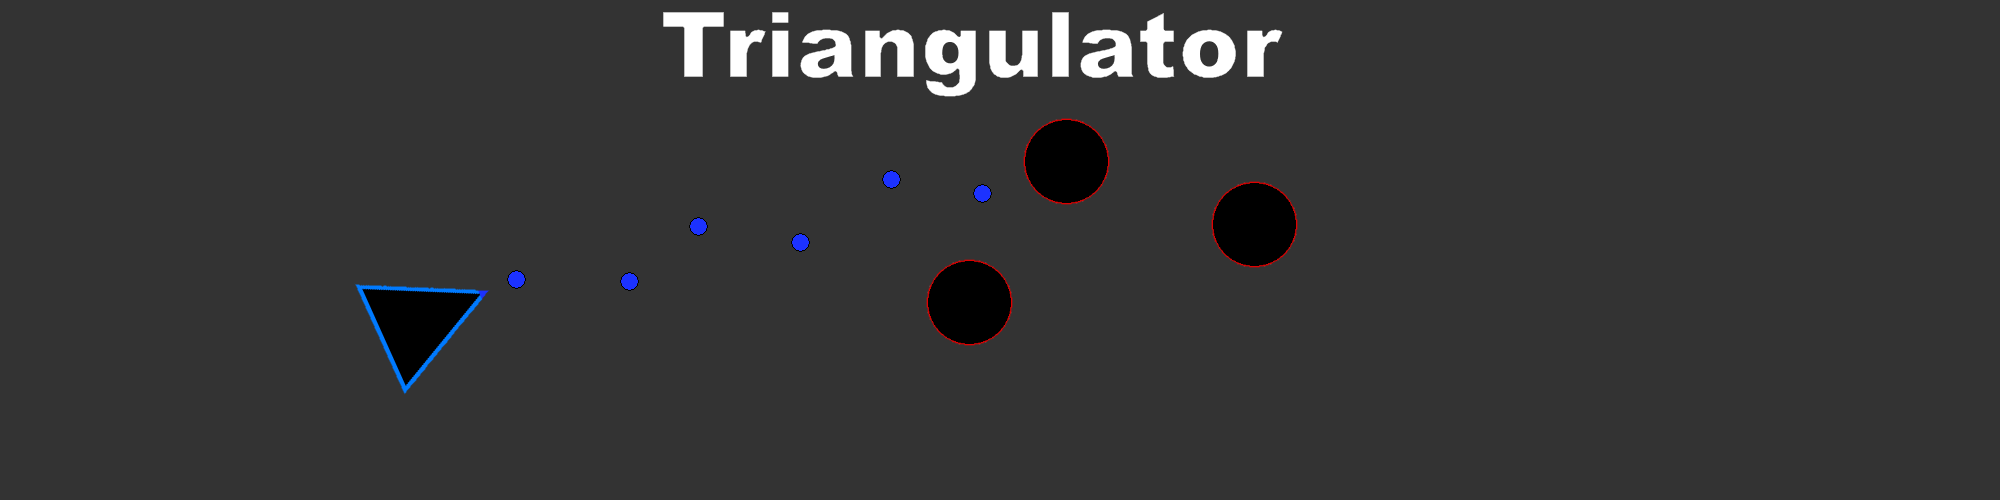 Triangulator